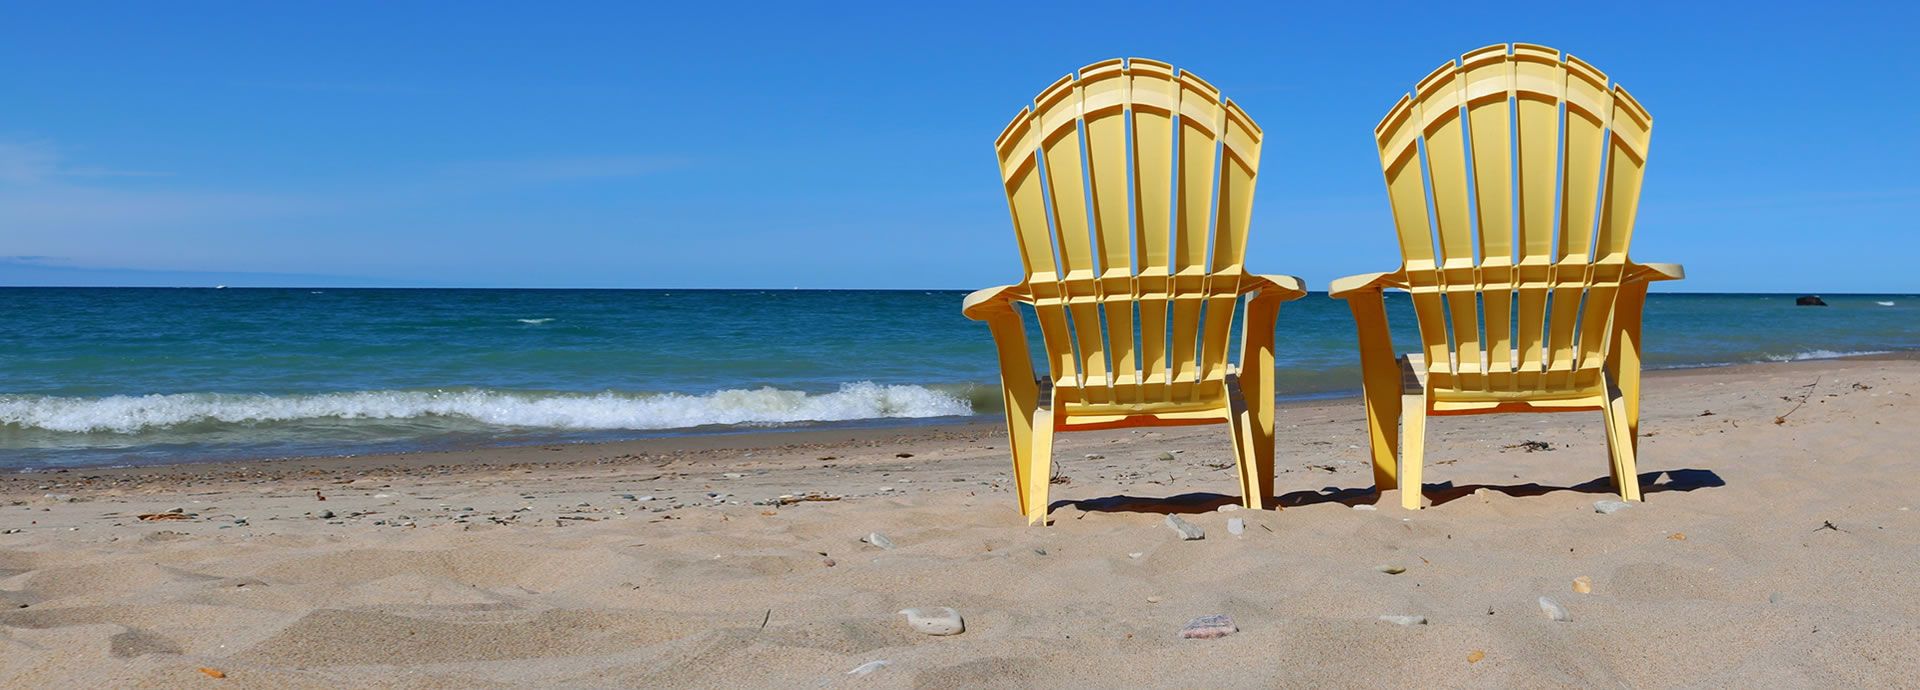 Plastic beach chairs on beach